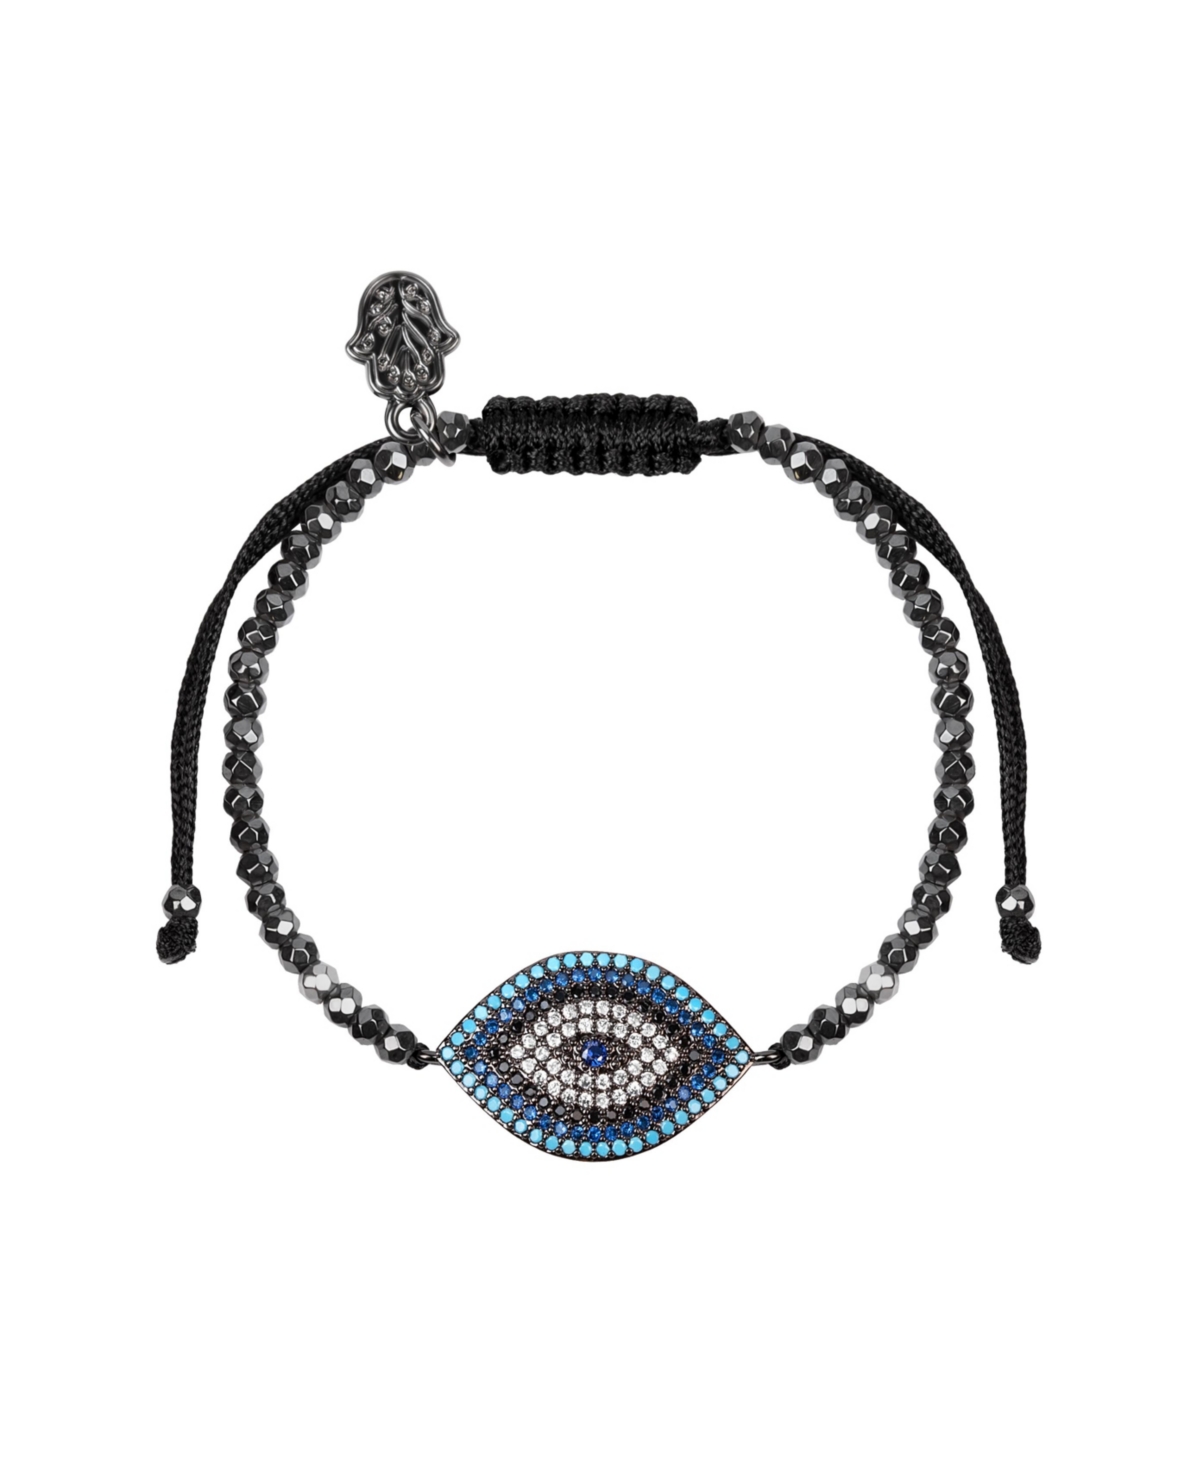 Bright Outlook Hematite Evil Eye Charm Bracelet - Dark grey/black/blue